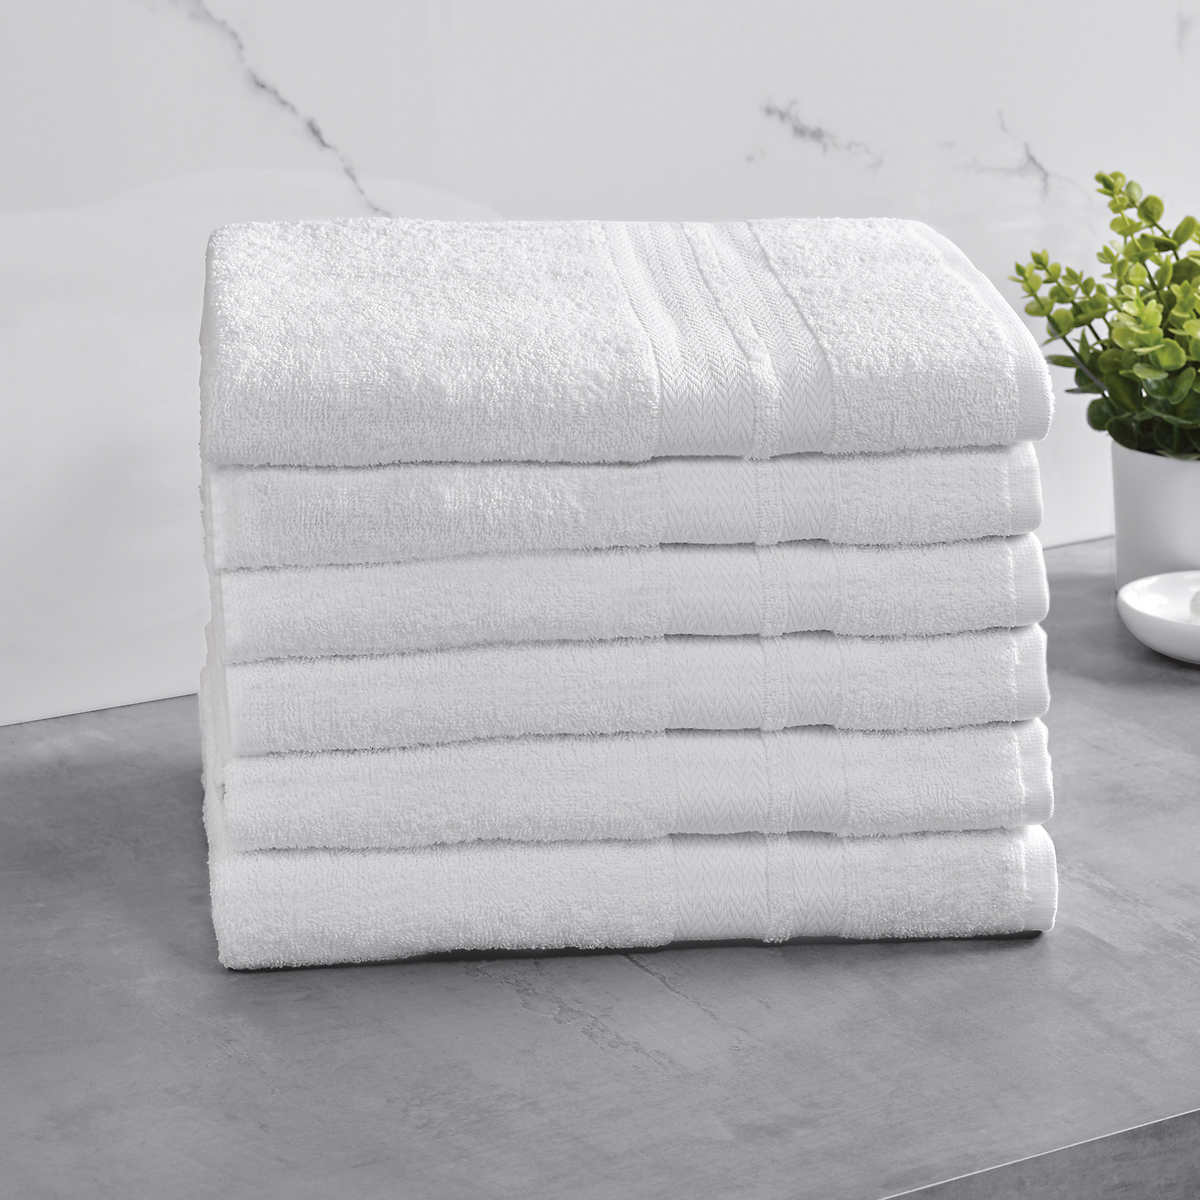 100% Cotton Extra Large Sauna Towel Set – Your Warm Cure